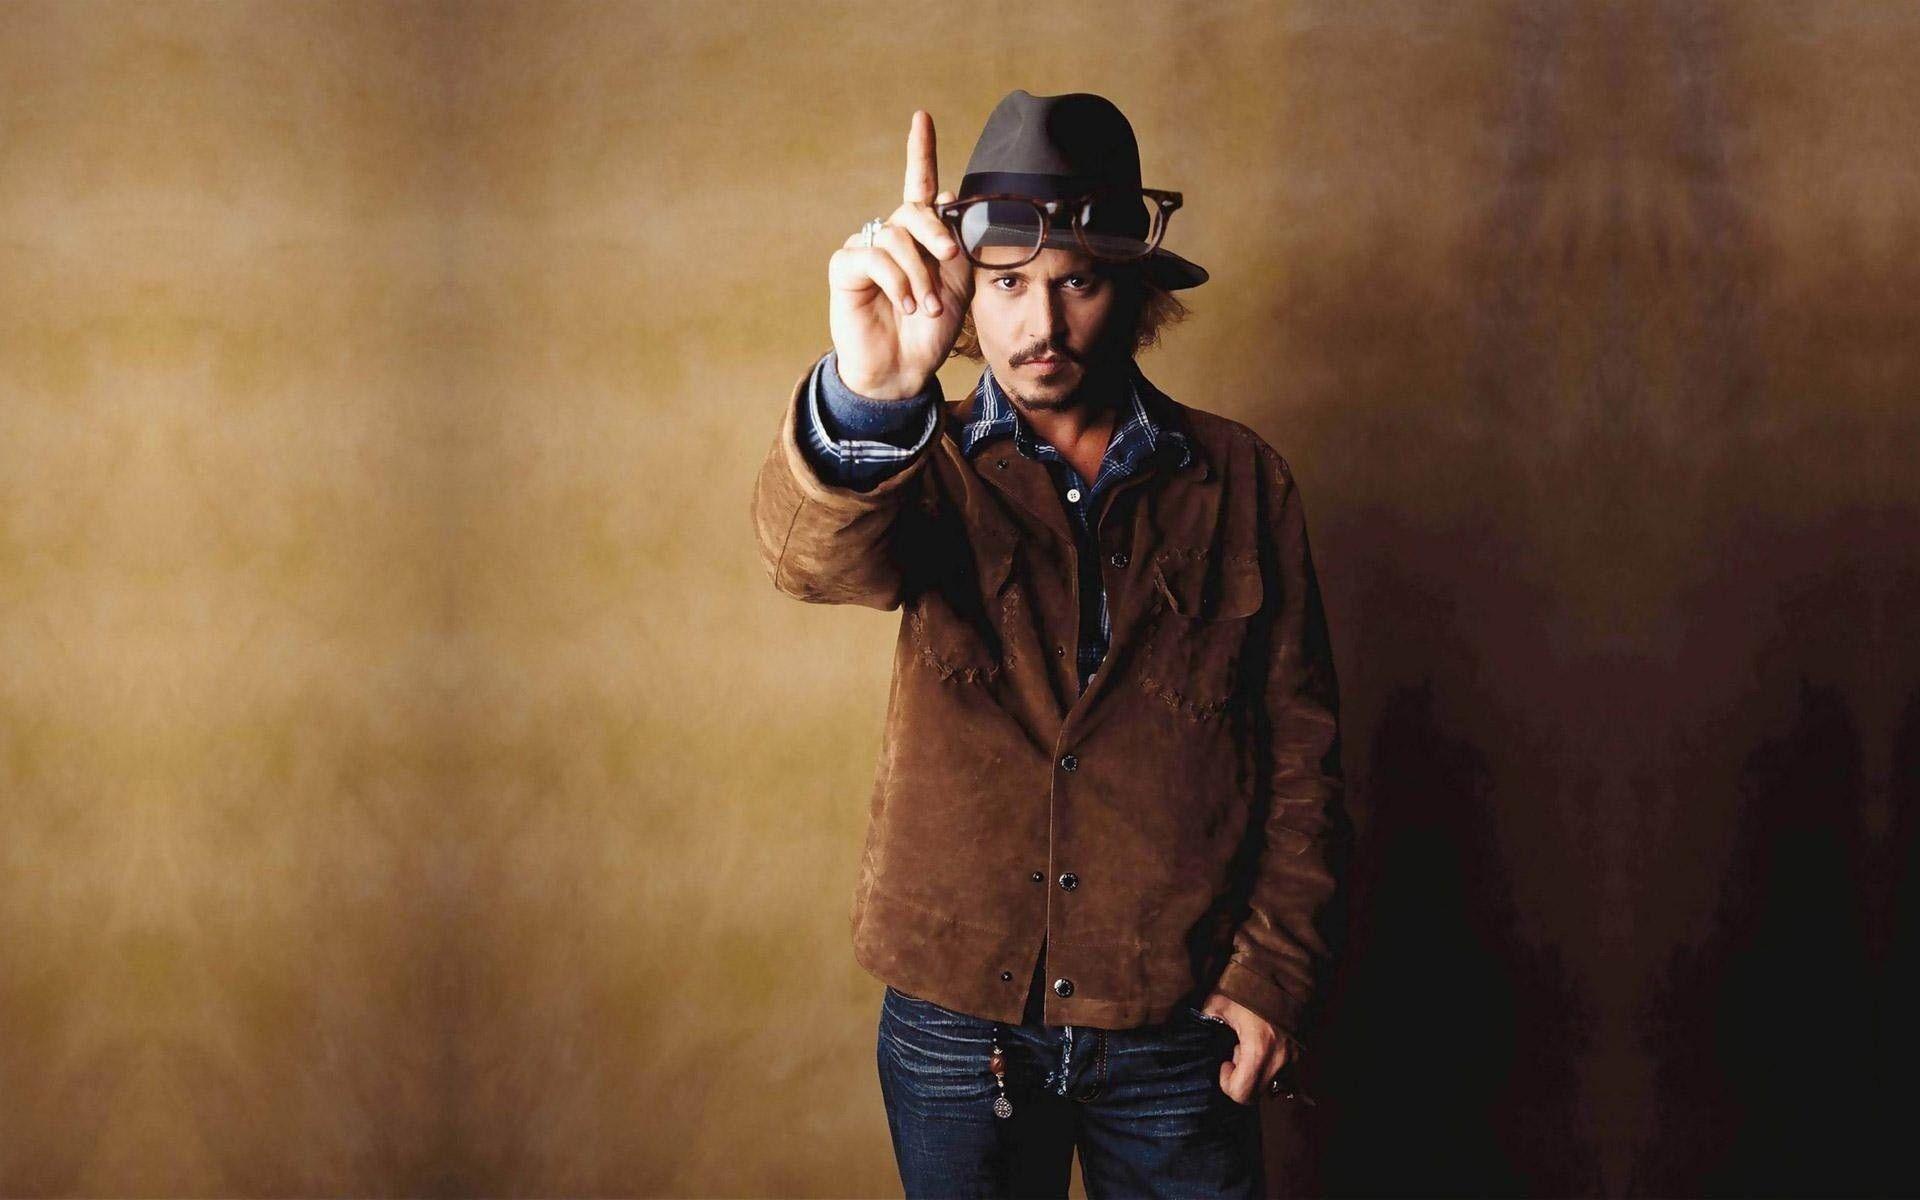 Johnny Depp HD Photo. Movie Celebrity Actor Wallpaper Image